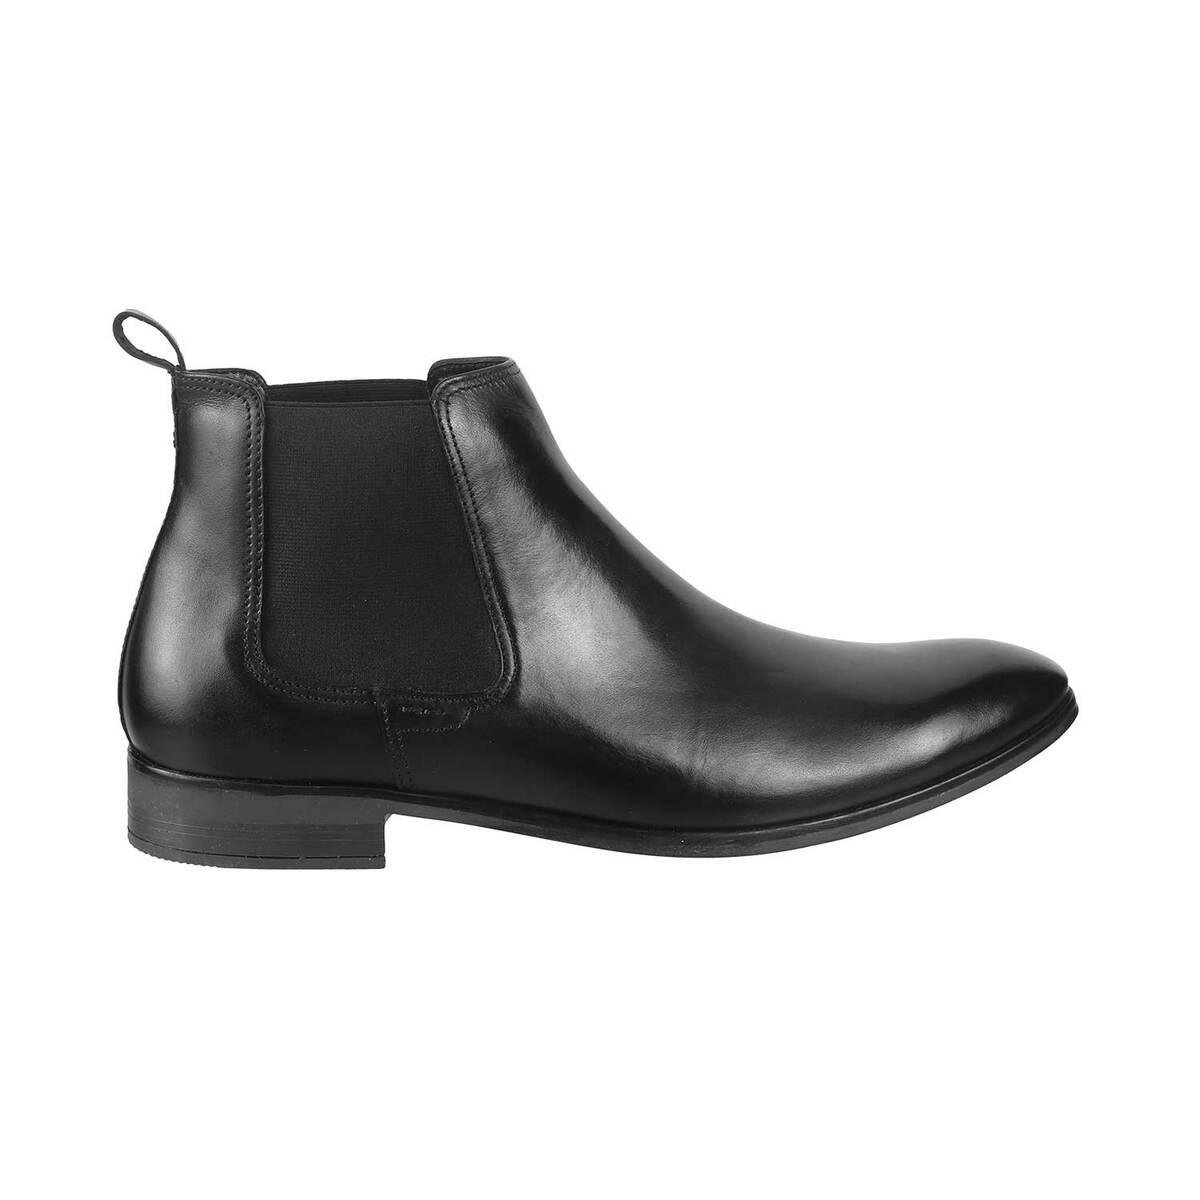 Buy Men Black Formal Boots Online | SKU: 19-6440-11-40-Metro Shoes